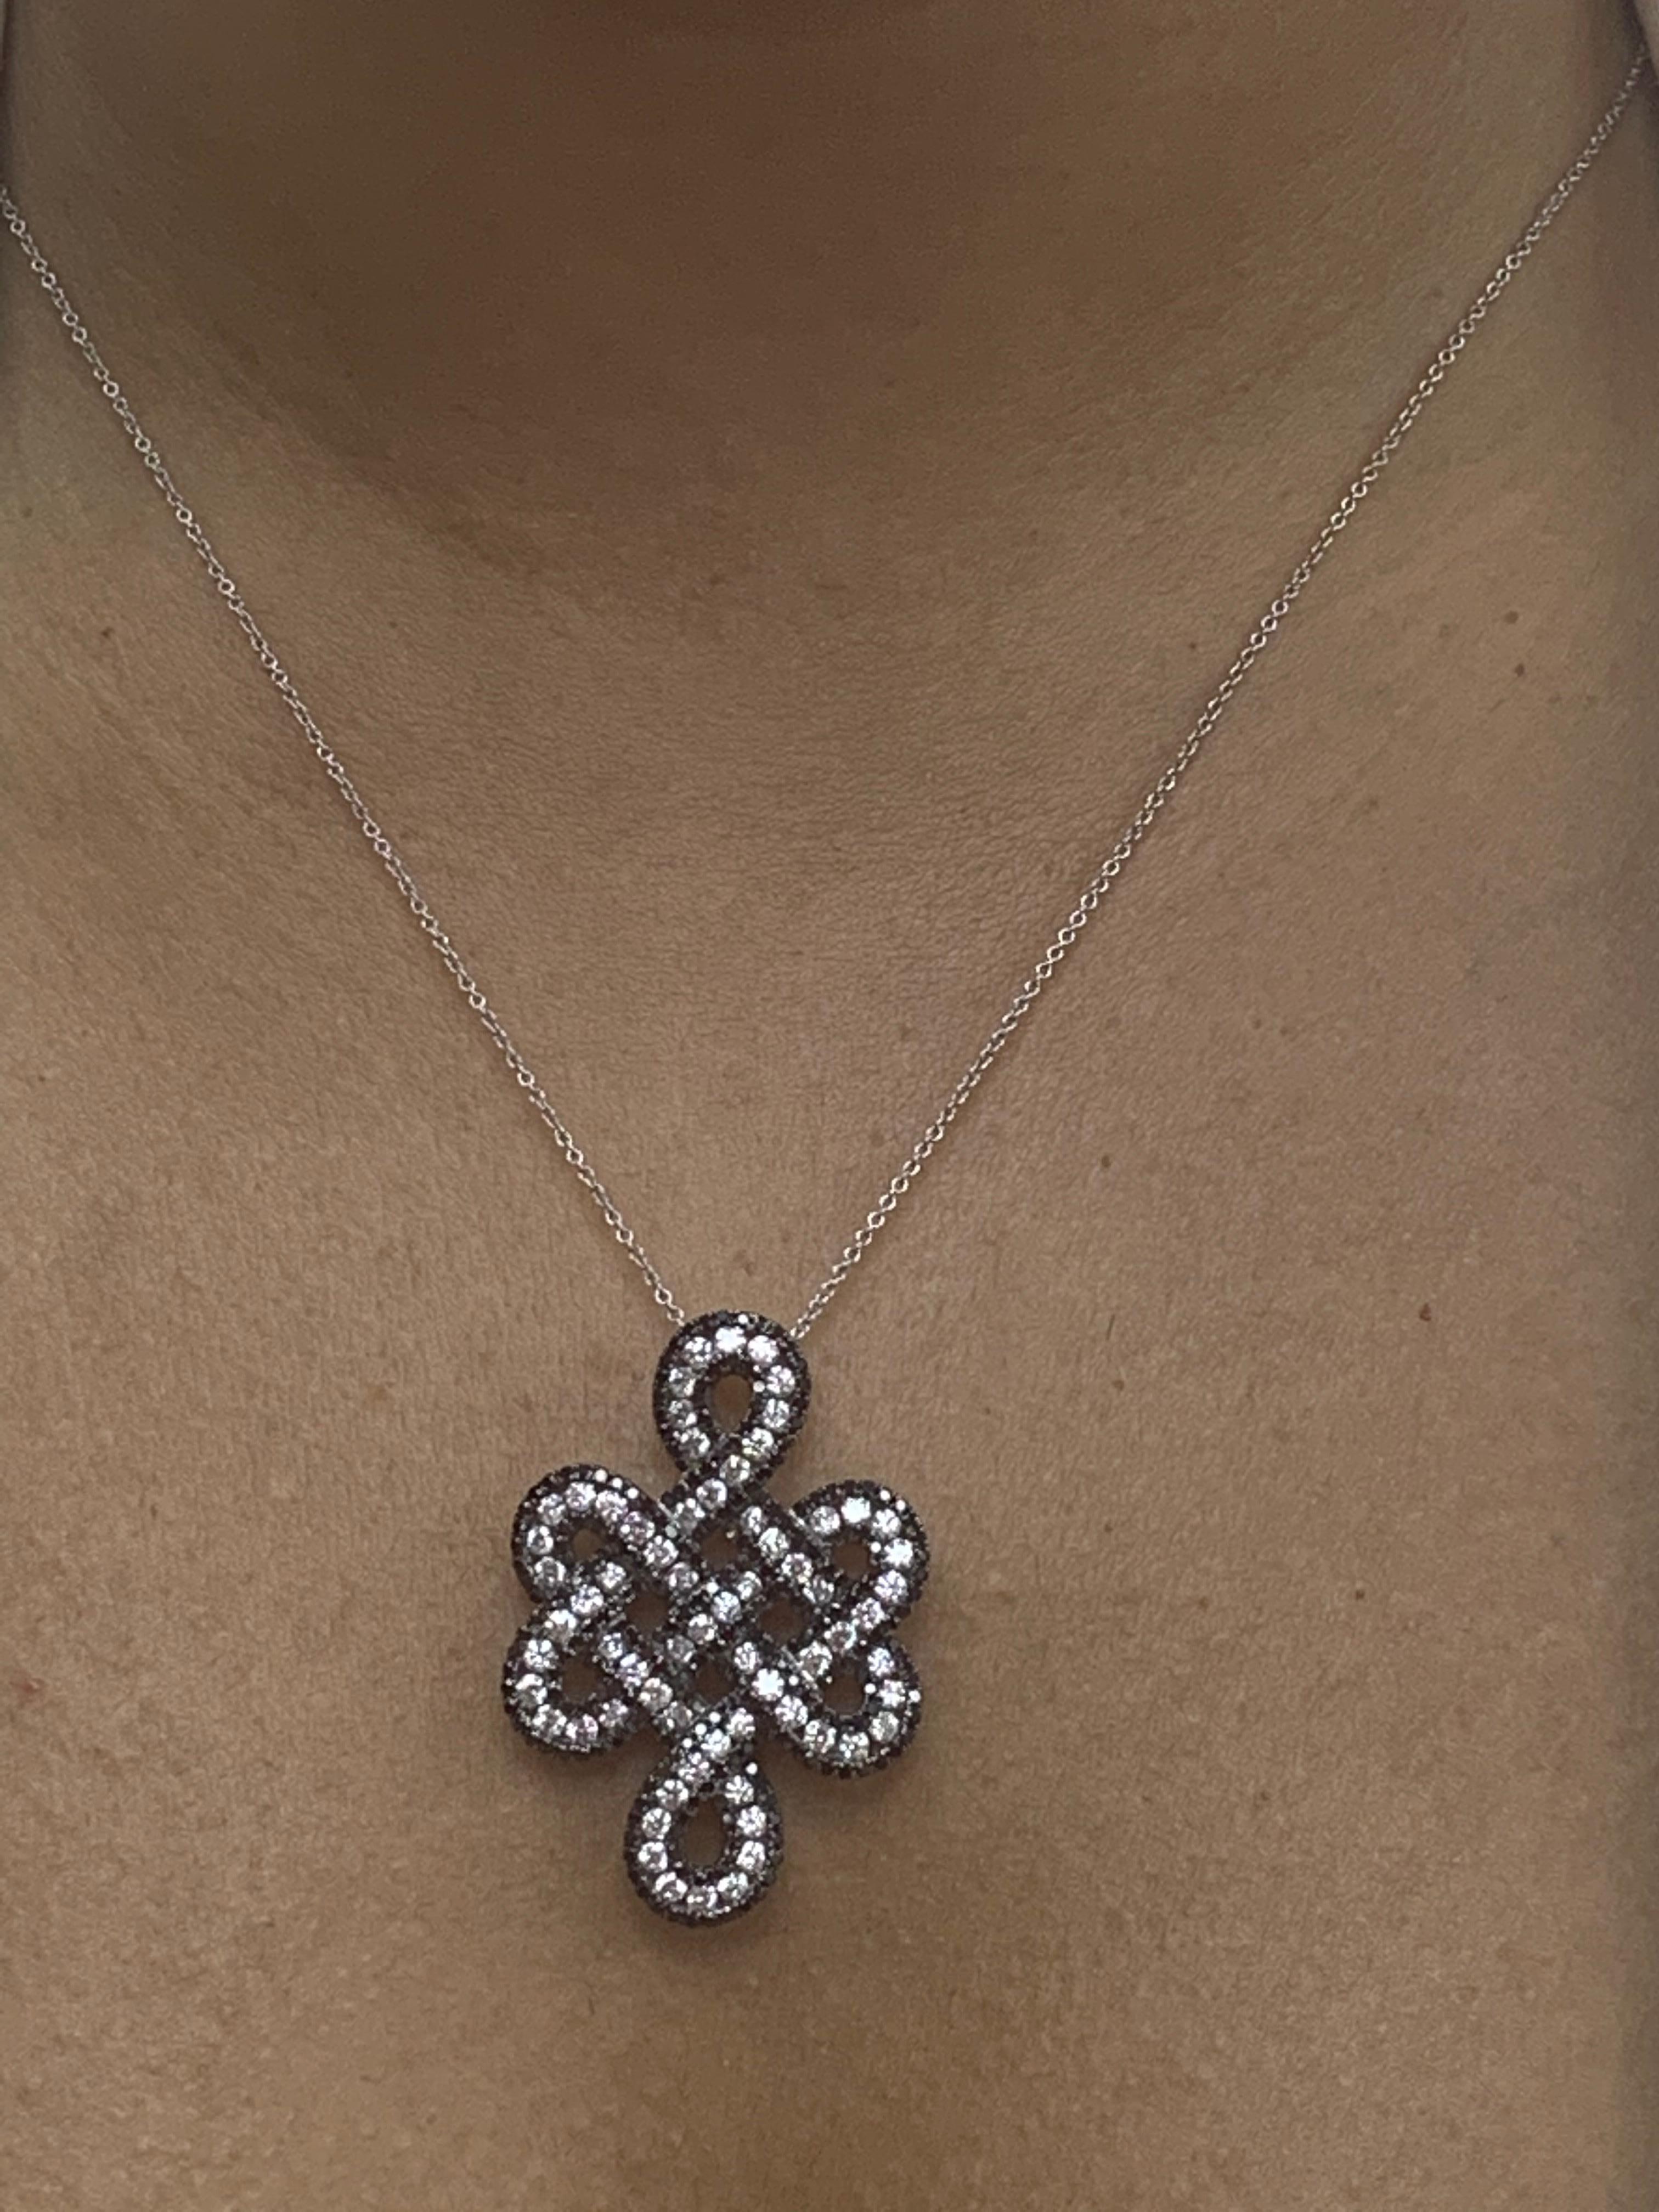 Grandeur 1.31 Carat Fancy Black and White Diamond Pendant Necklace in 18K For Sale 3